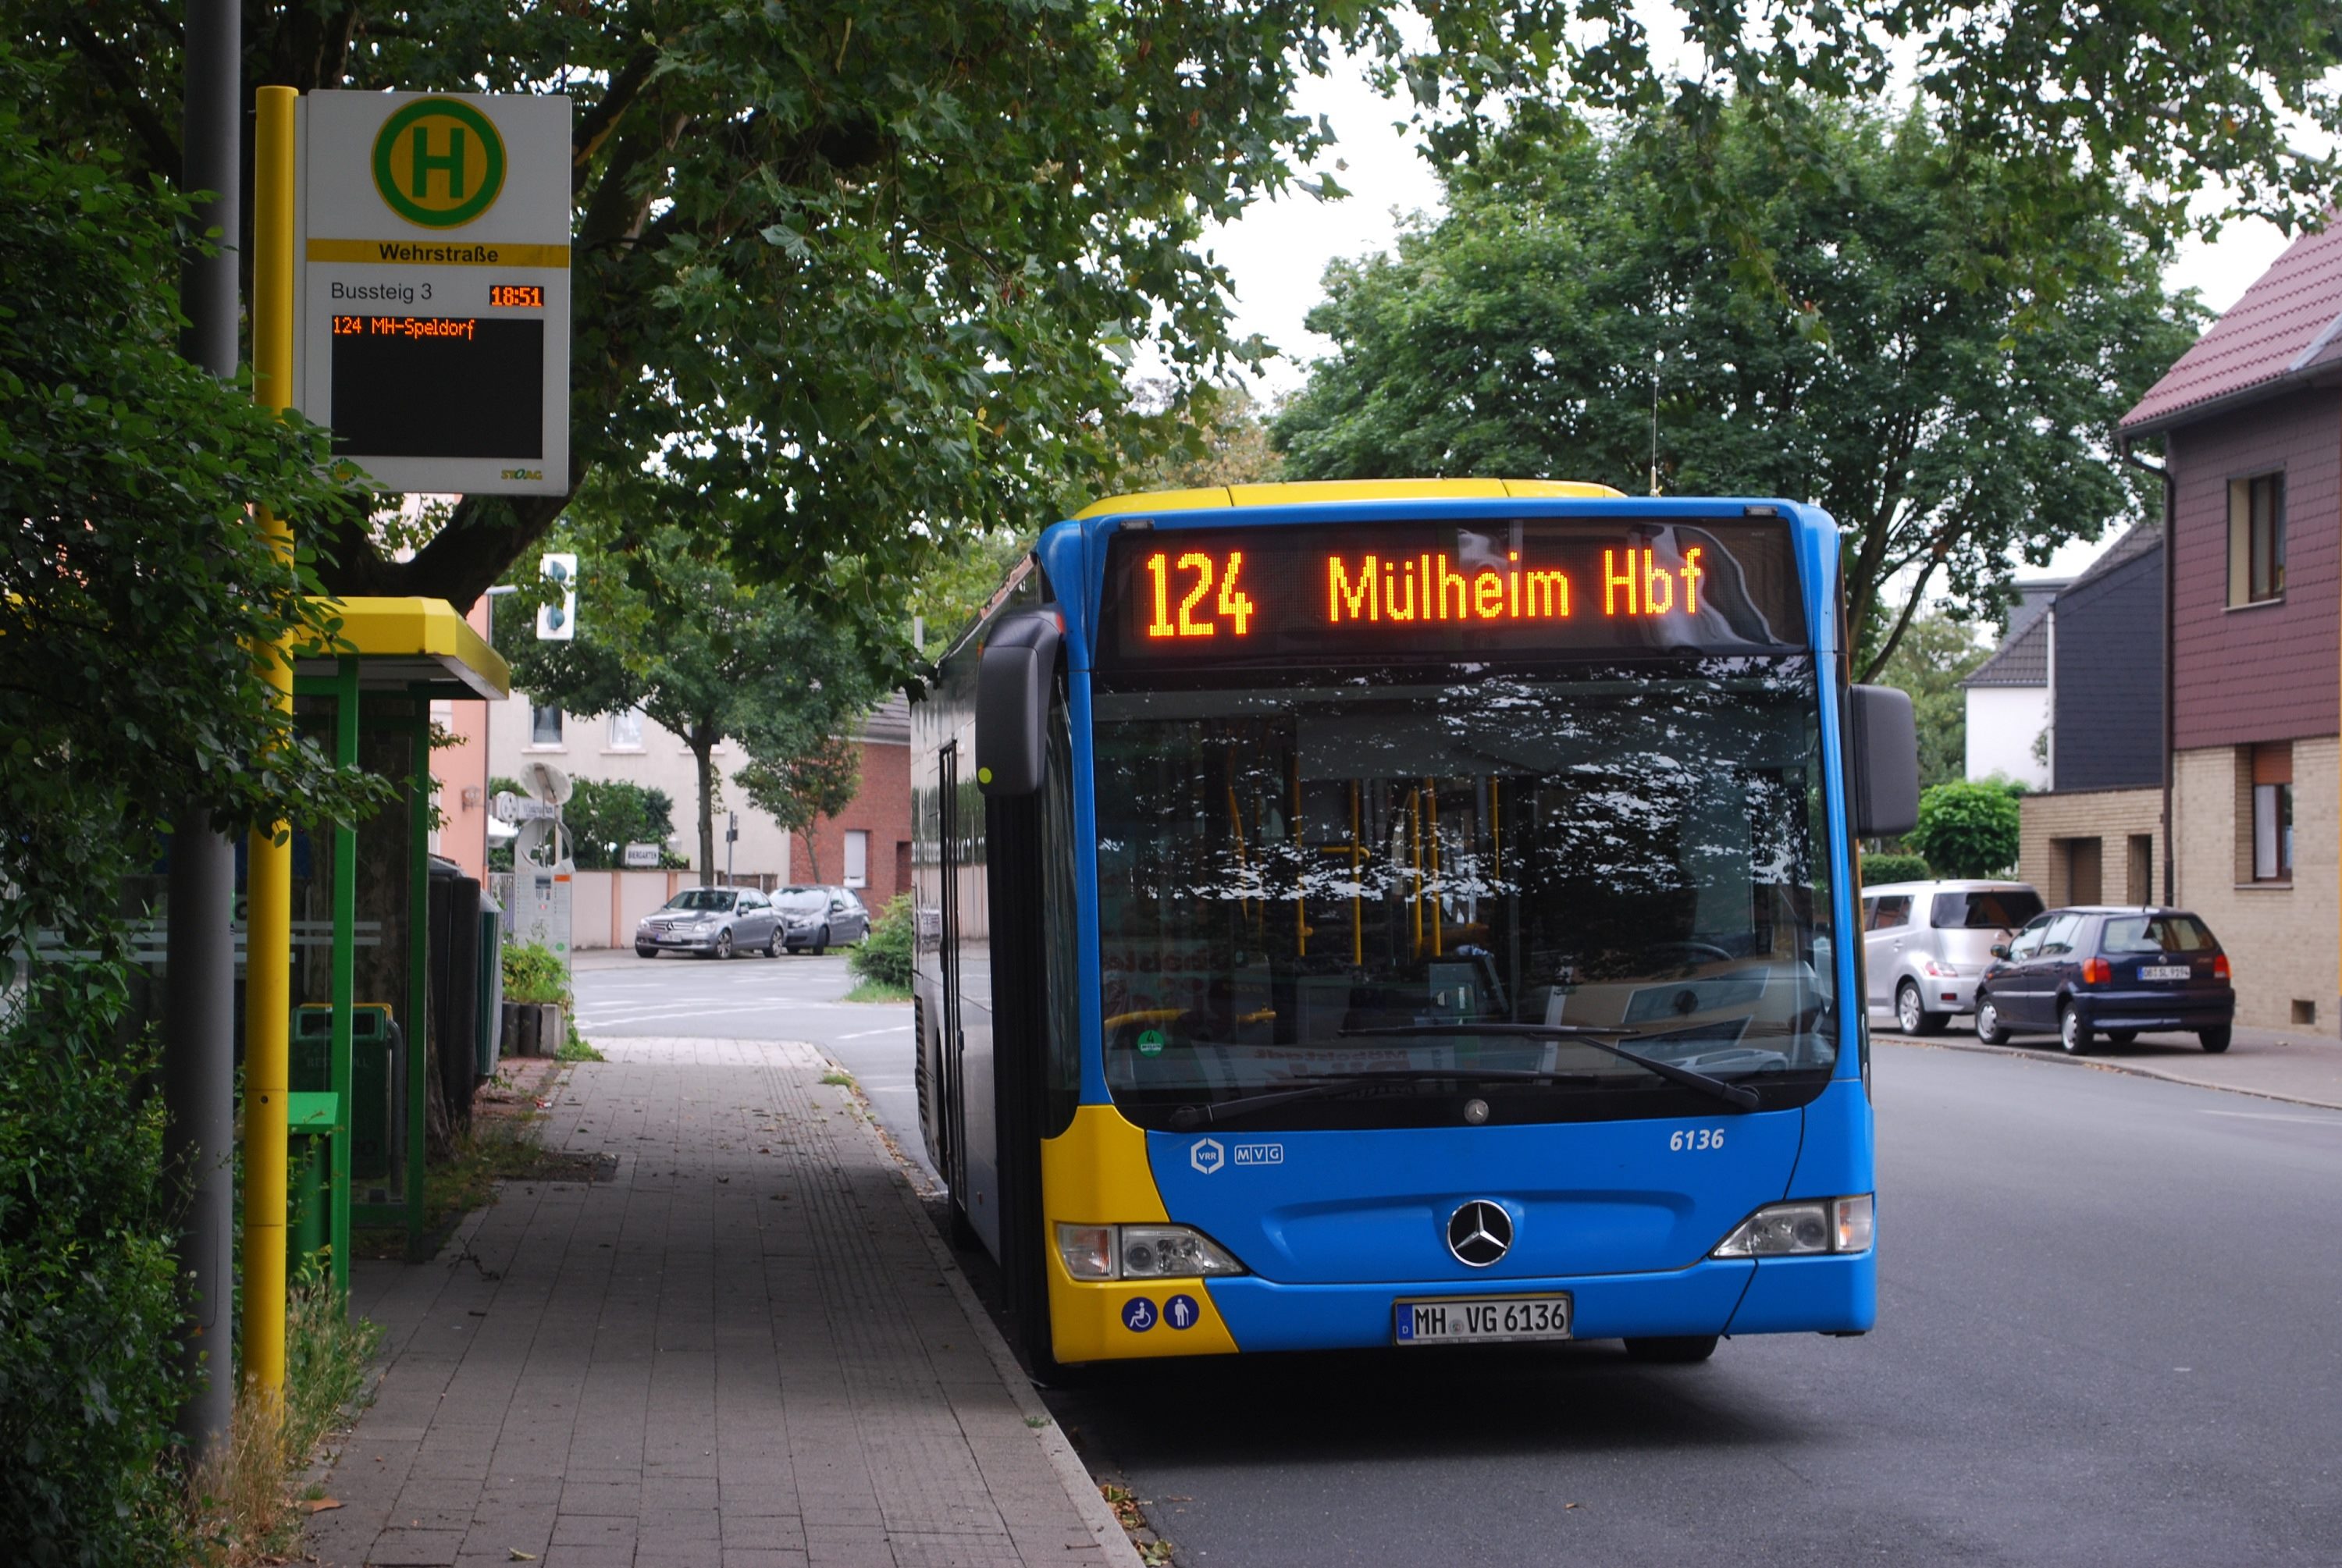 124 Mülheim Hbf OB-Wehrstraße